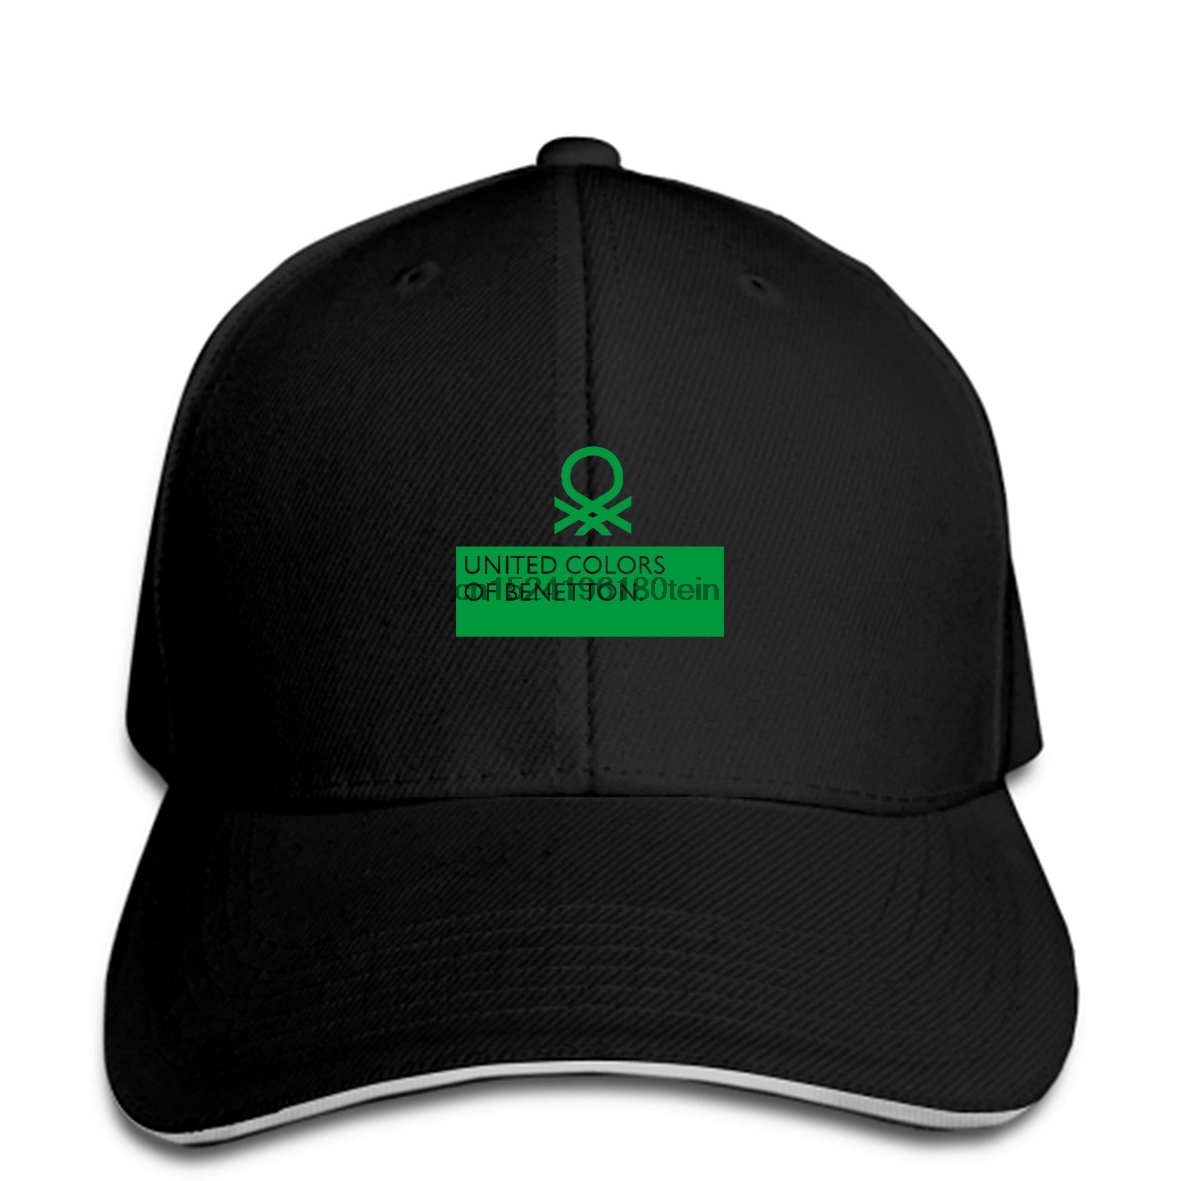 Baseball Cap Men s benetton_logo -Tee snapback hat Peaked